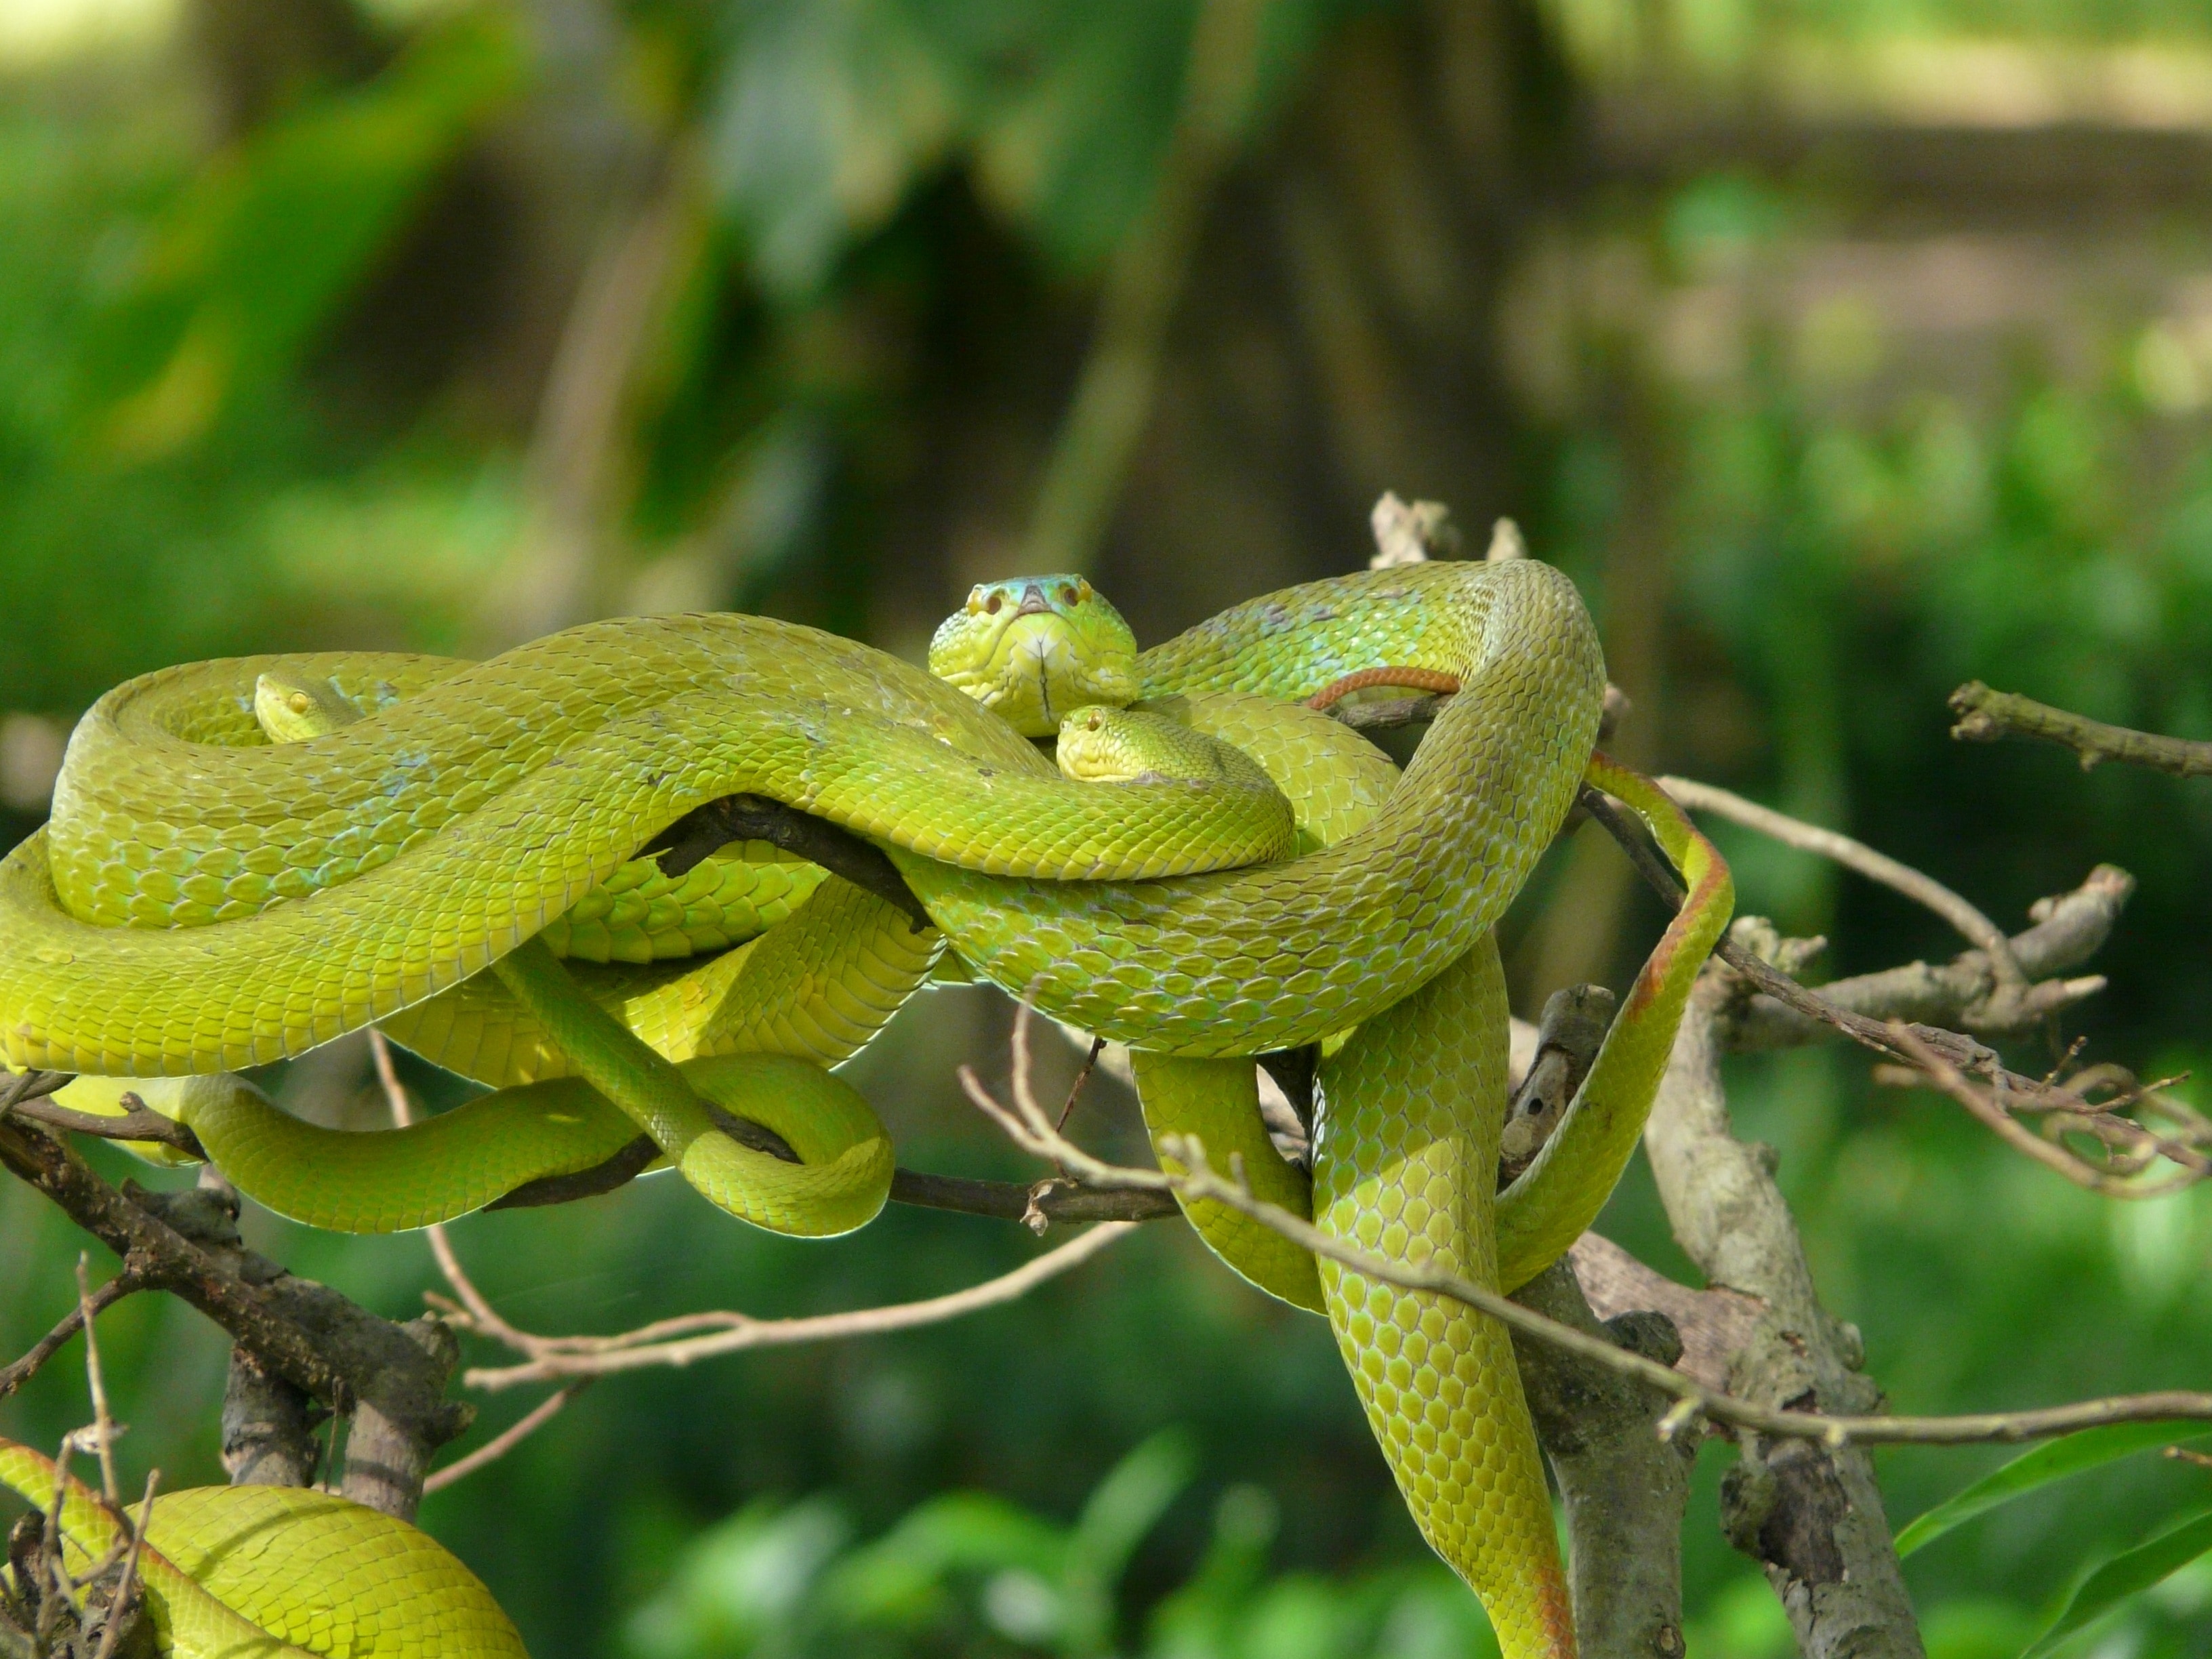 green snakes